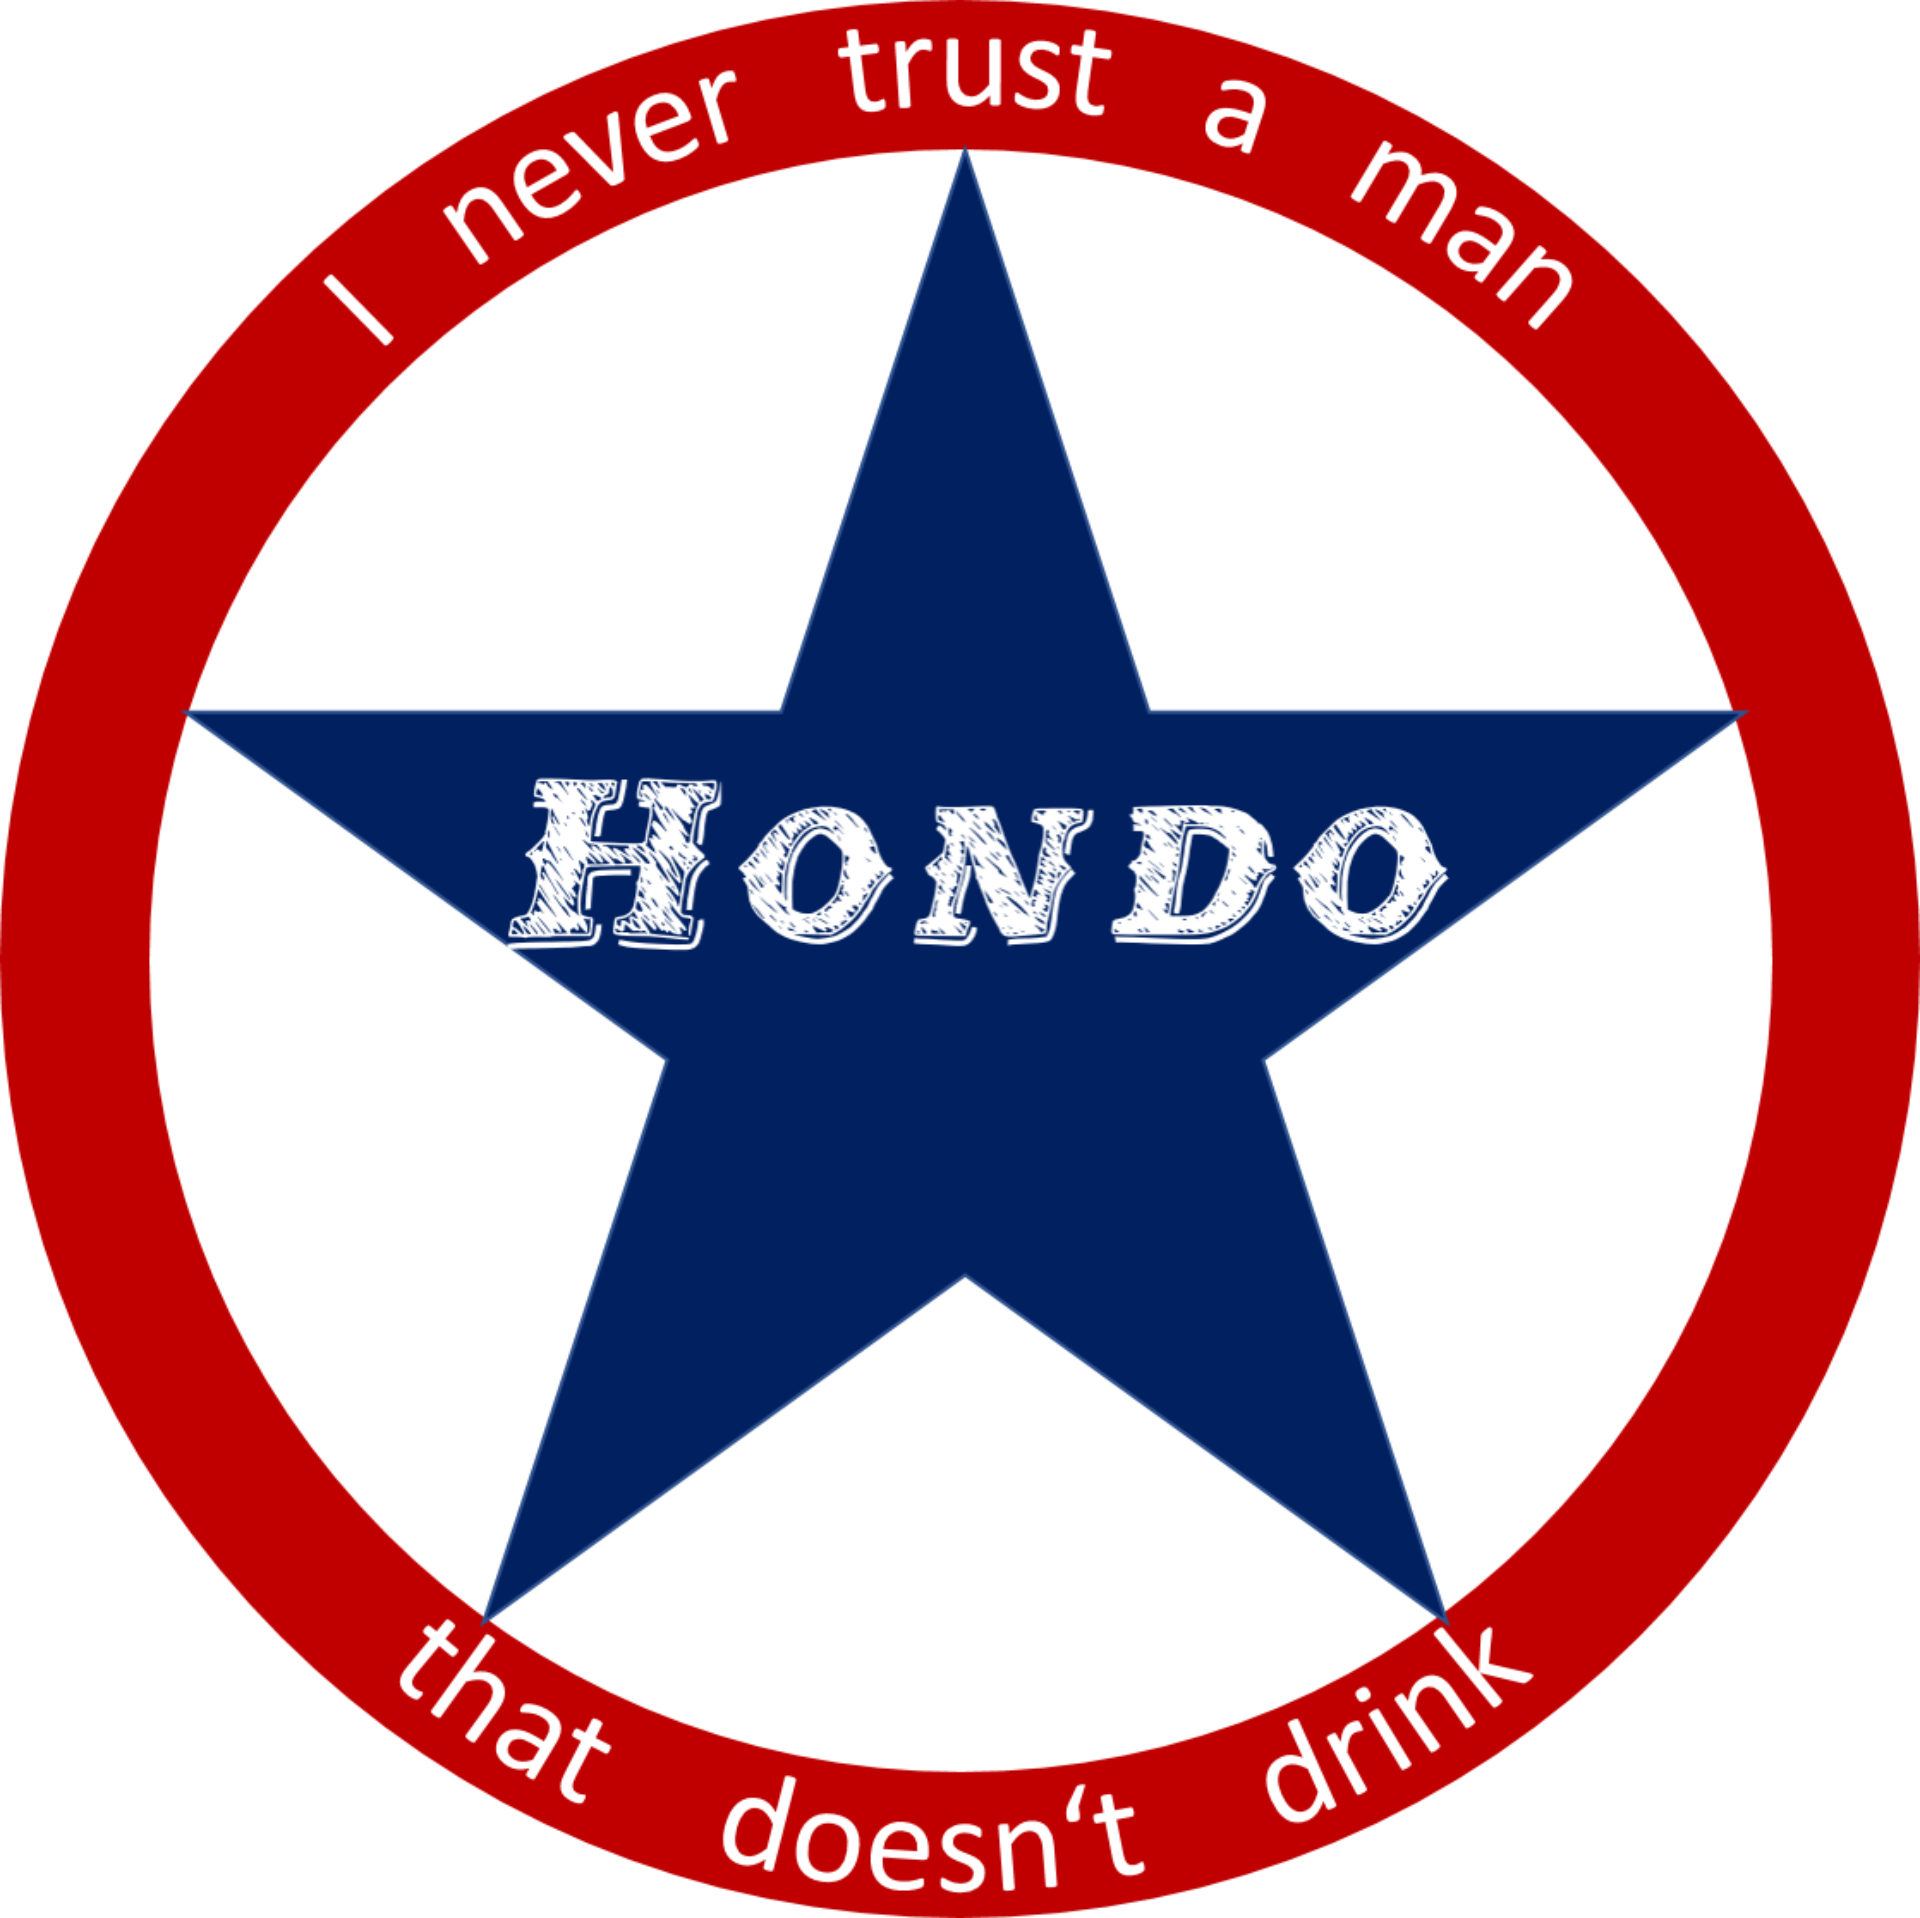 Hondo